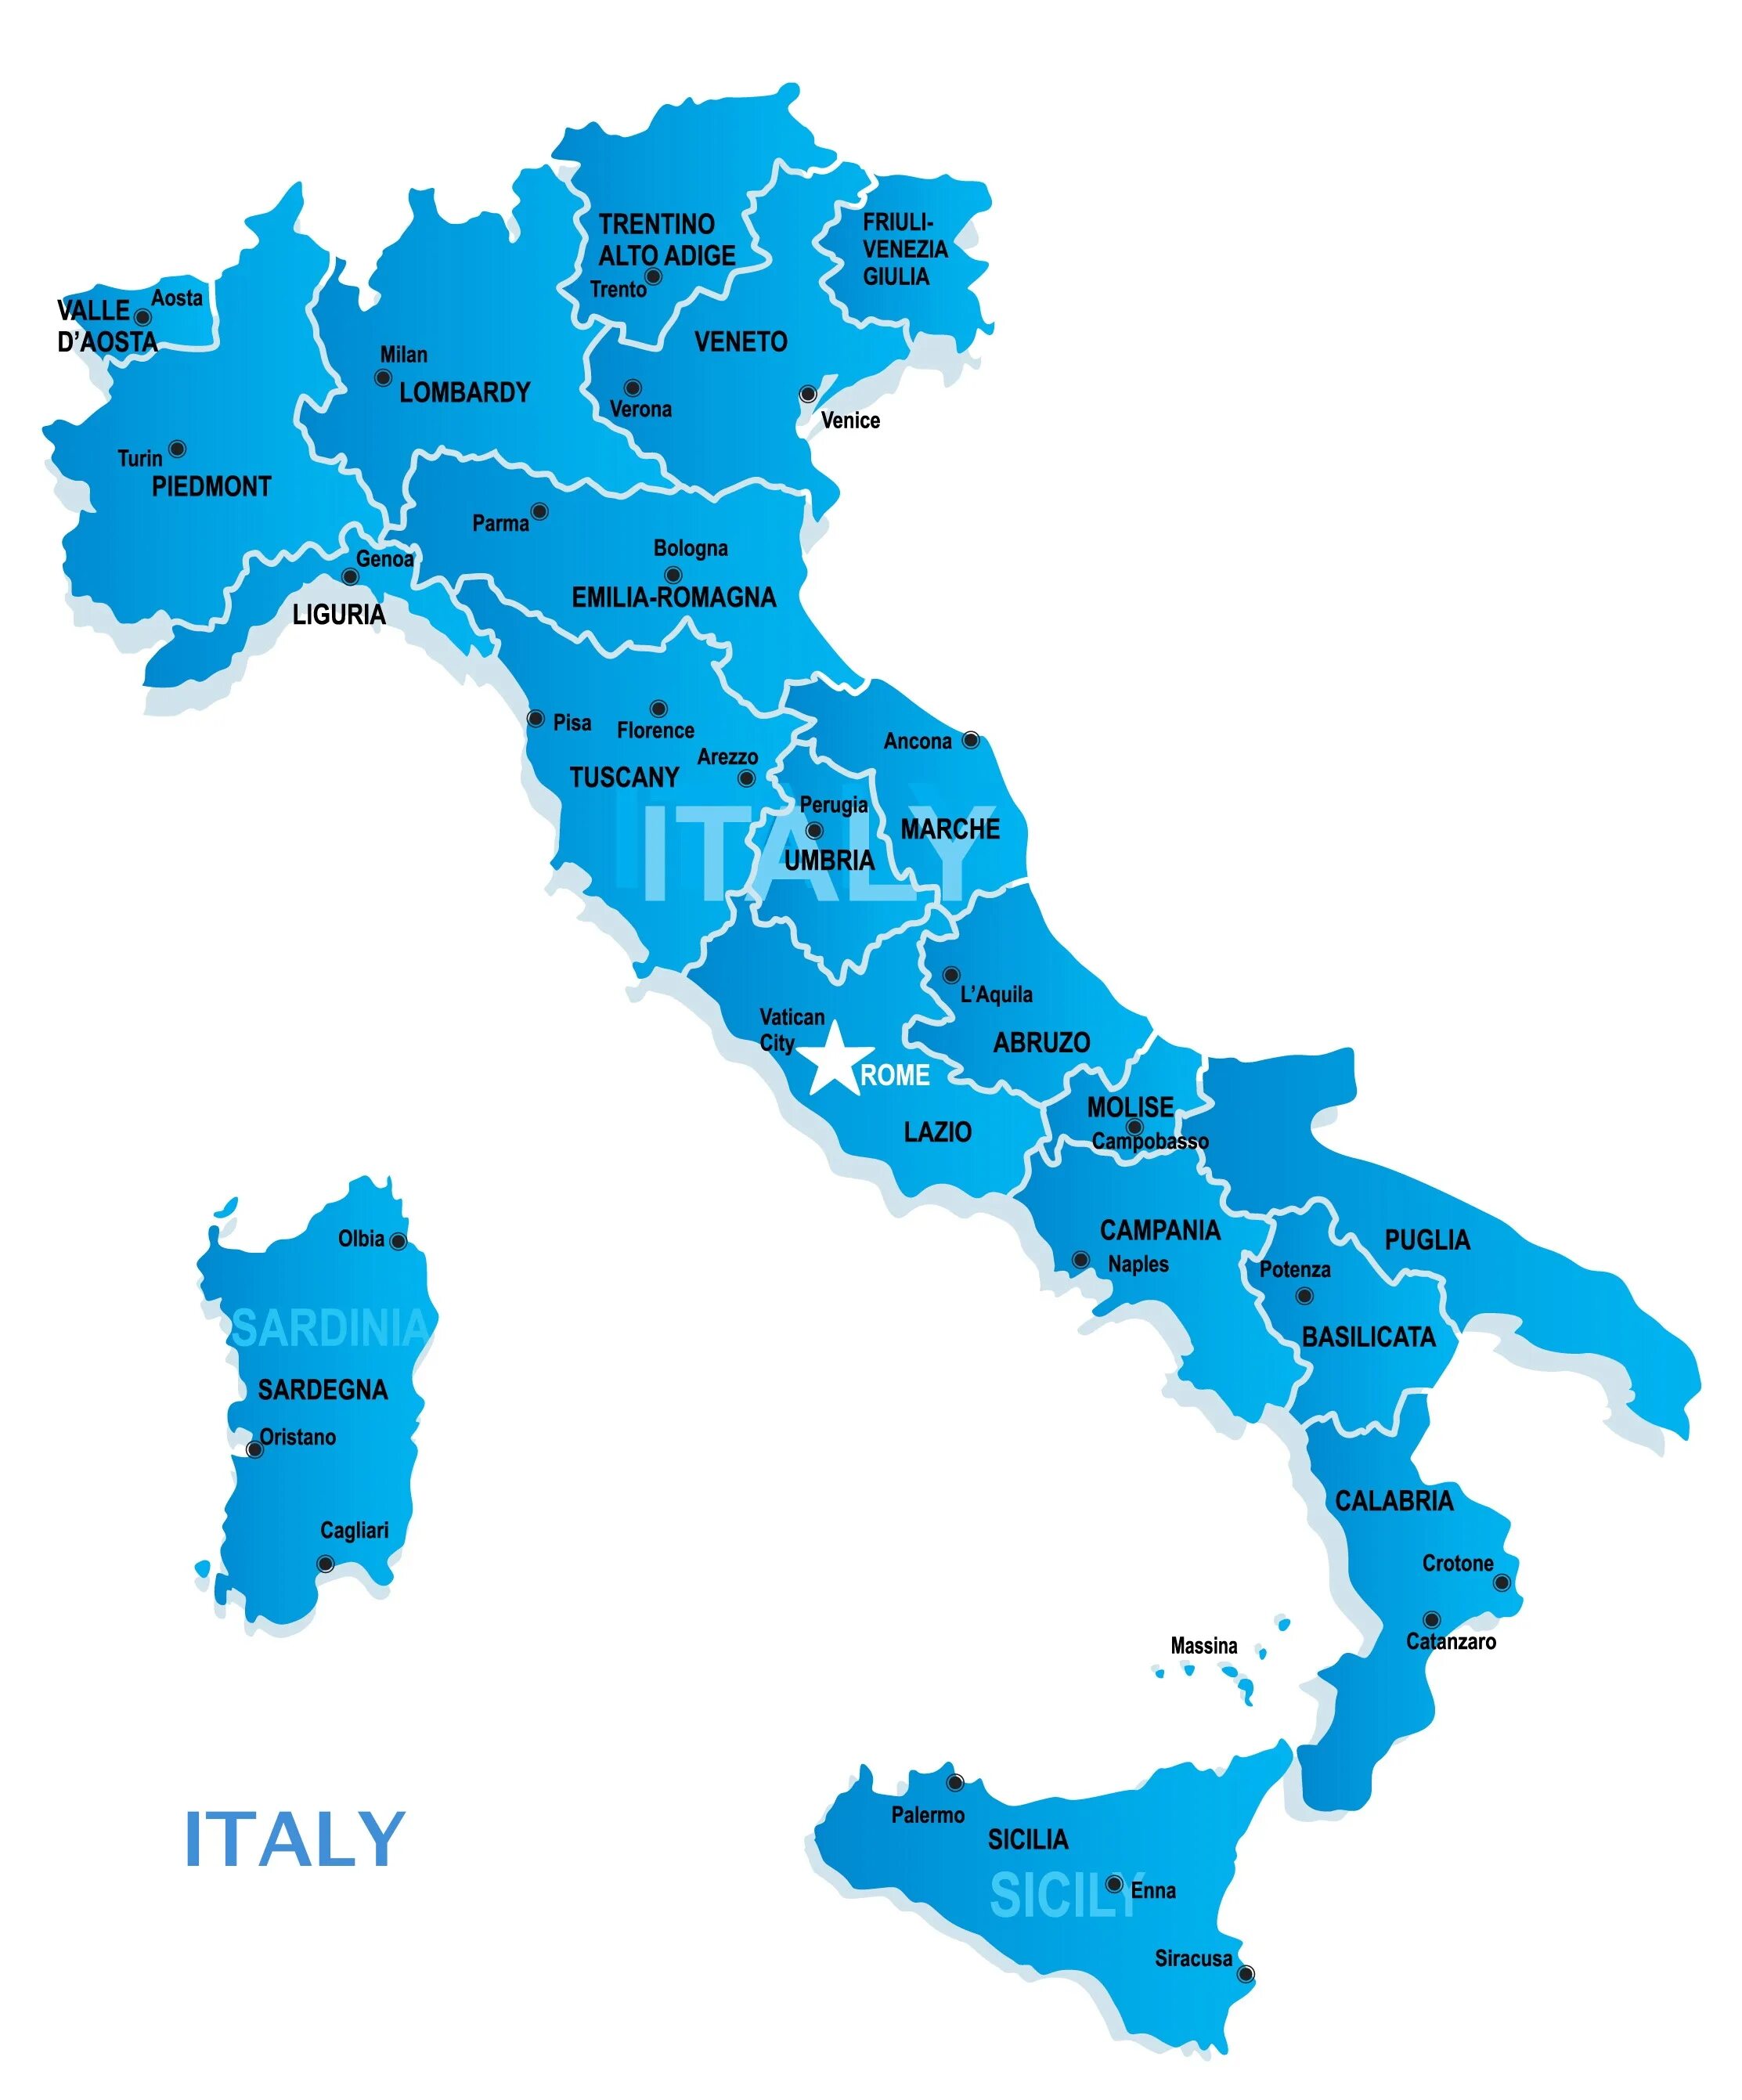 Италия страна на карте. Карта Италии с городами. Провинции Италии на карте. Политическая карта Италии. Регионы Италии на карте.